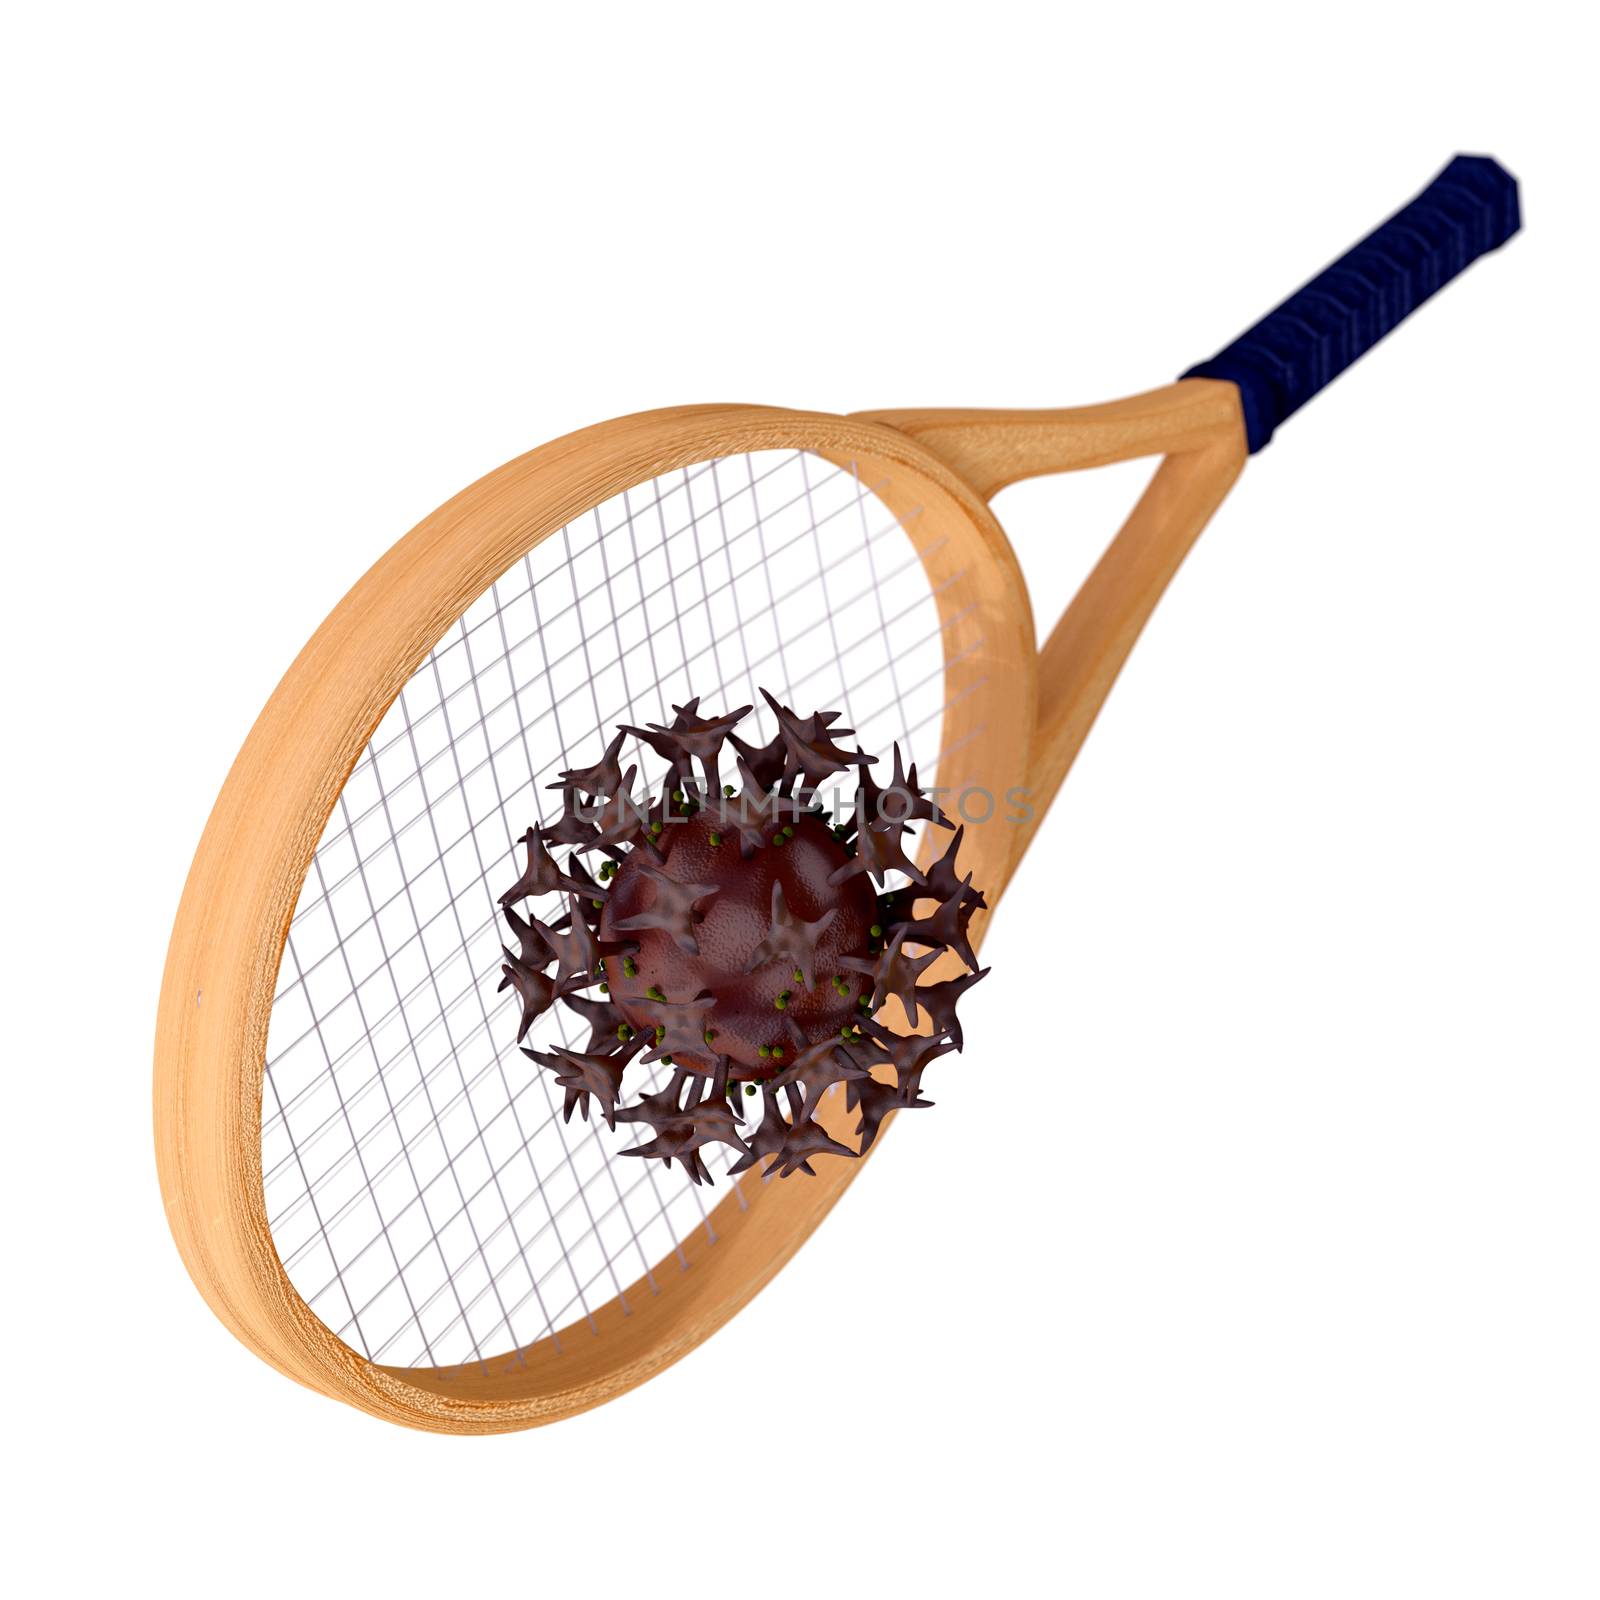 Tennis racquet and virus by dengess